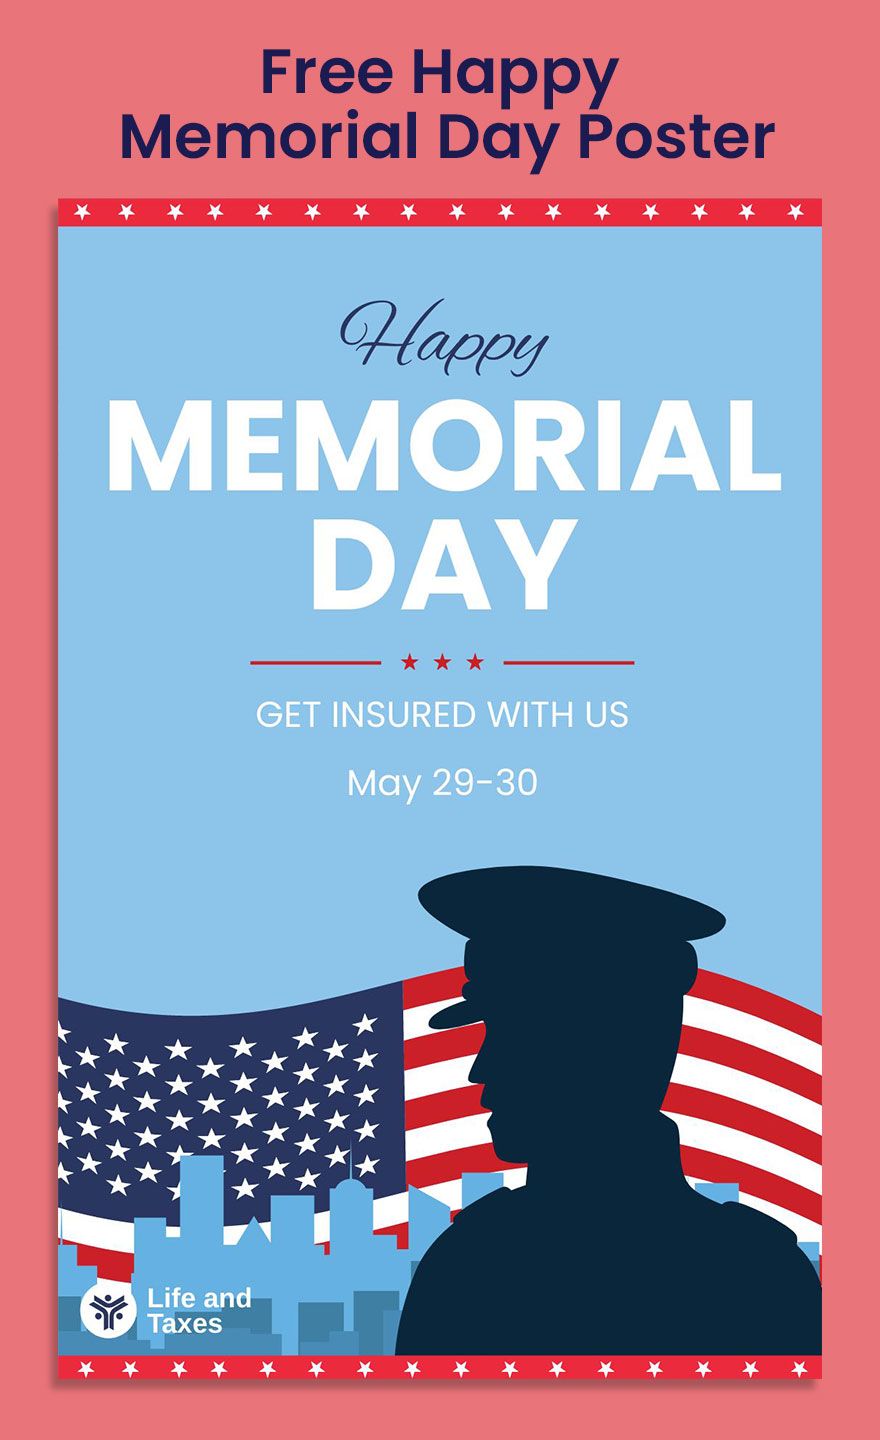 Happy Memorial Day Poster in Word, Google Docs, Illustrator, PSD, EPS, SVG, JPG, PNG